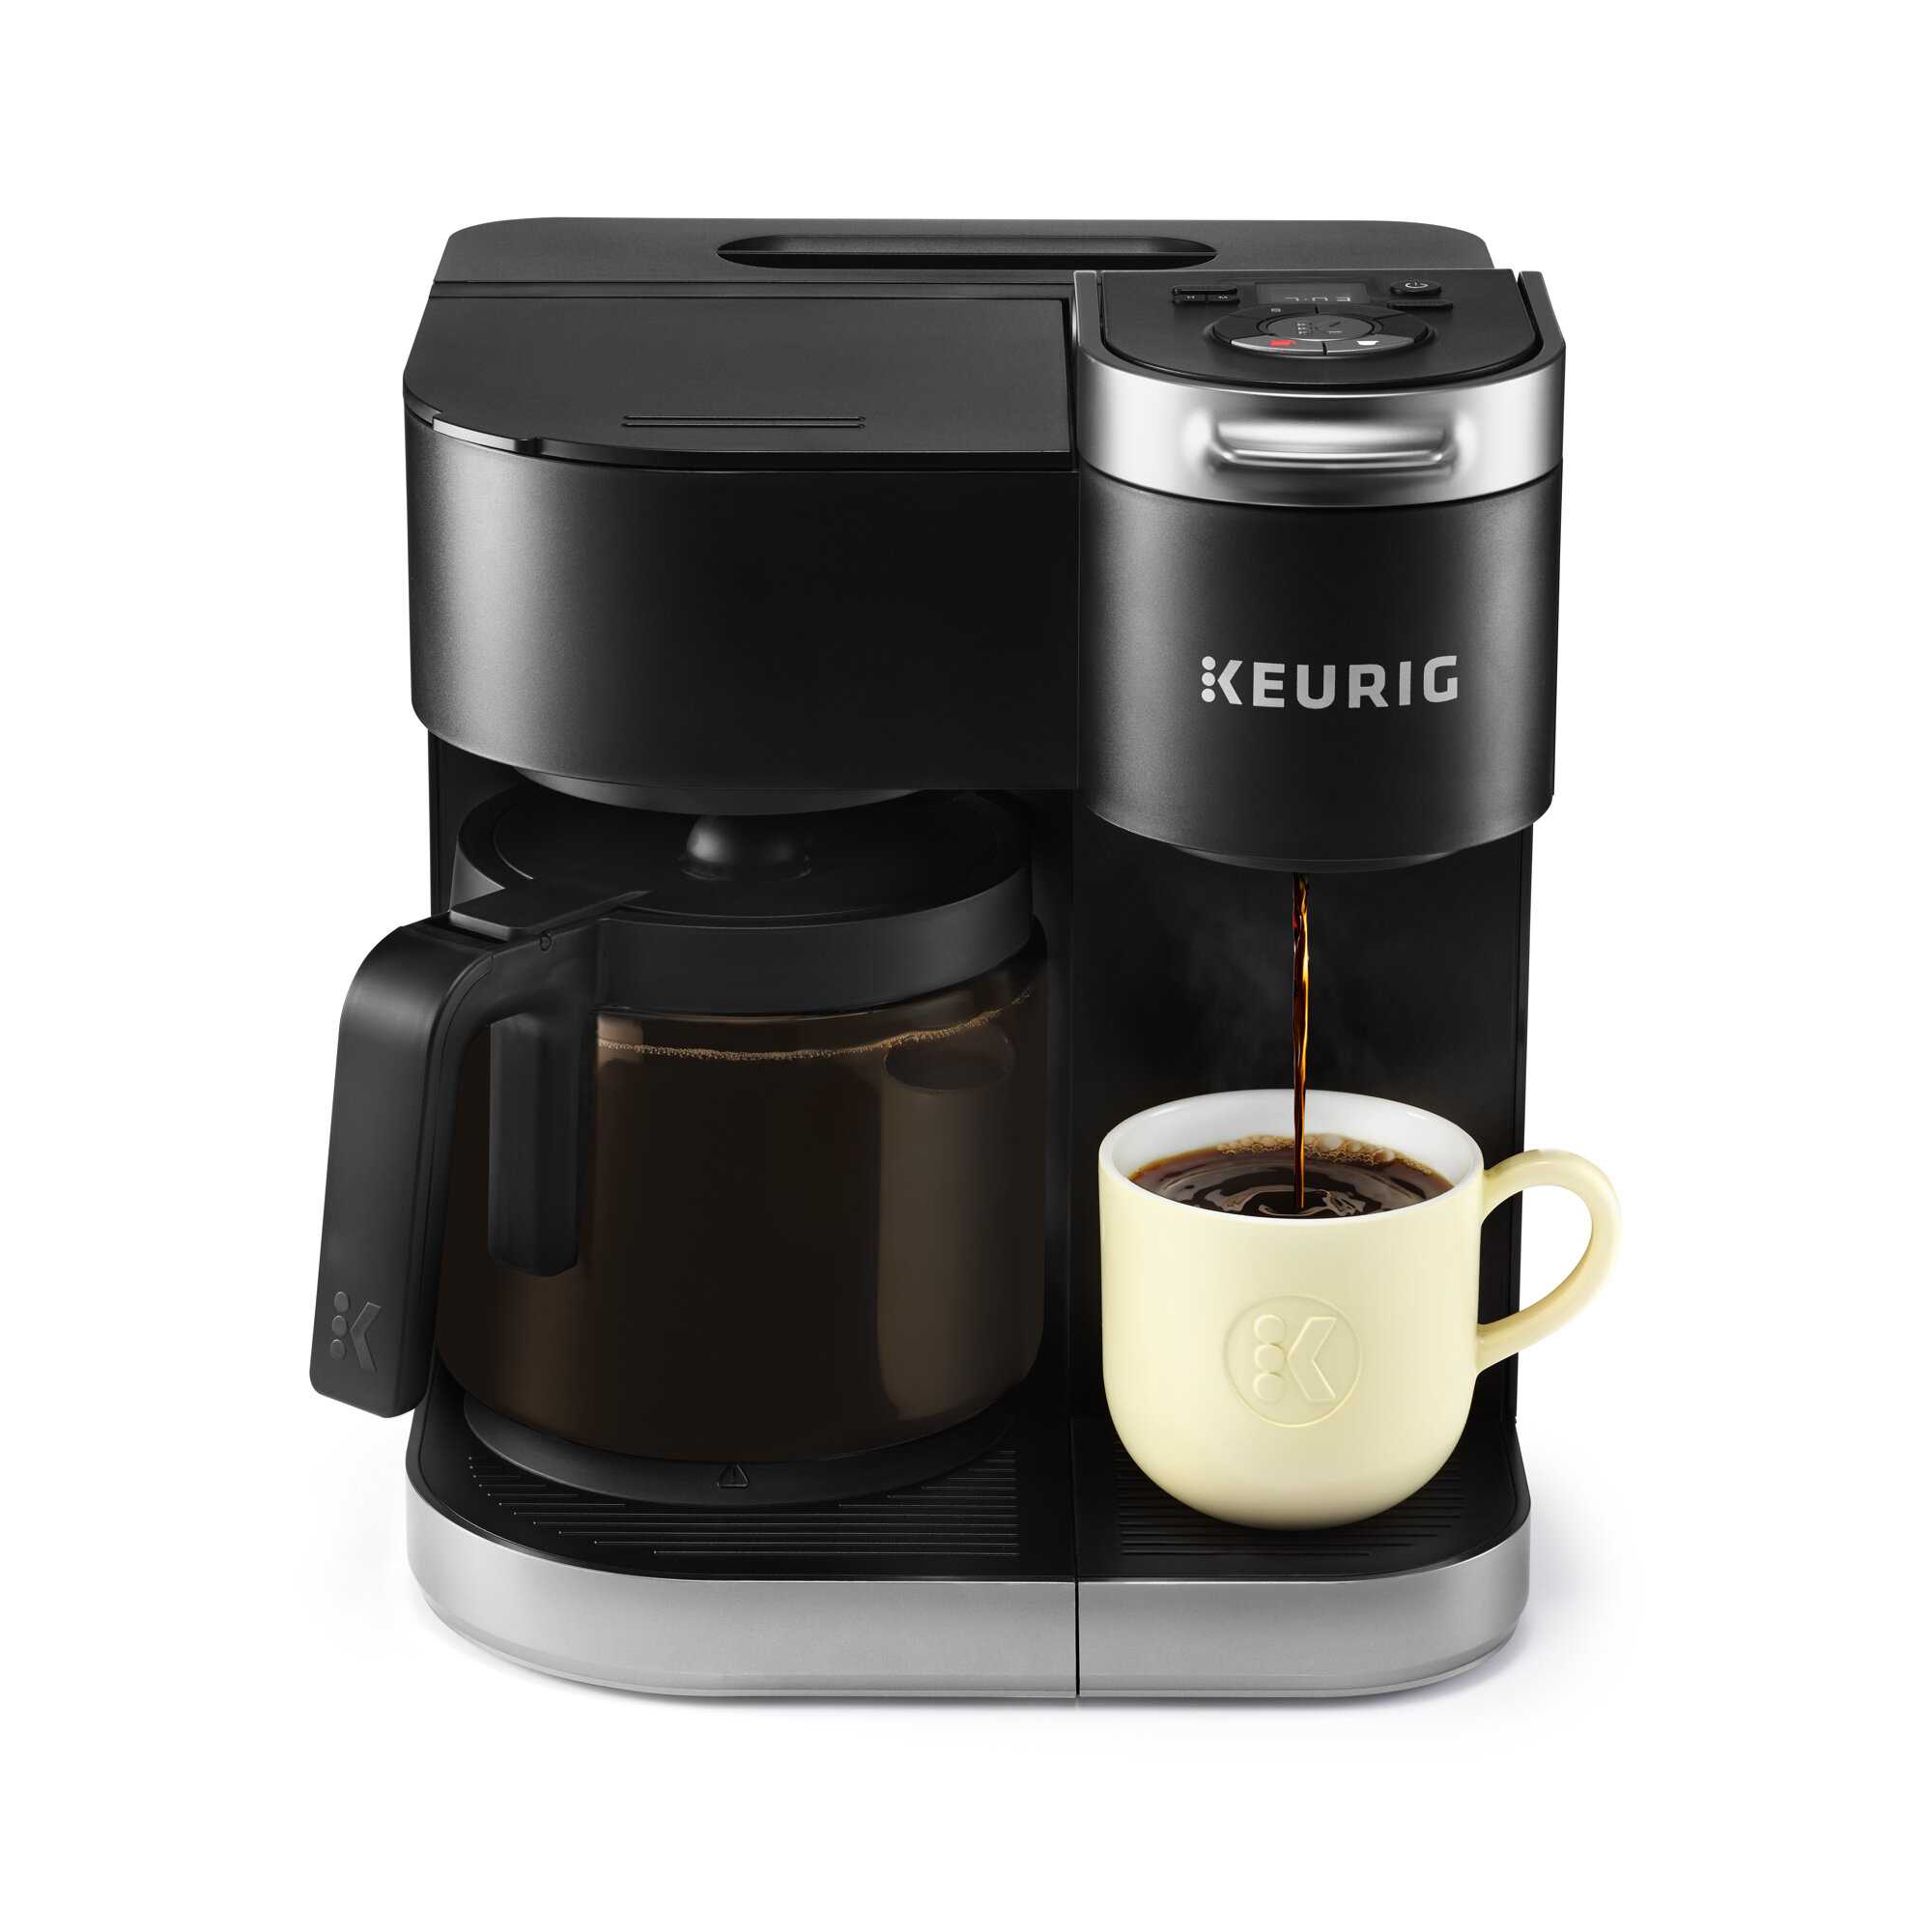 Keurig My Kcup Universal Coffee Filter, Black - 1 Count : : Home